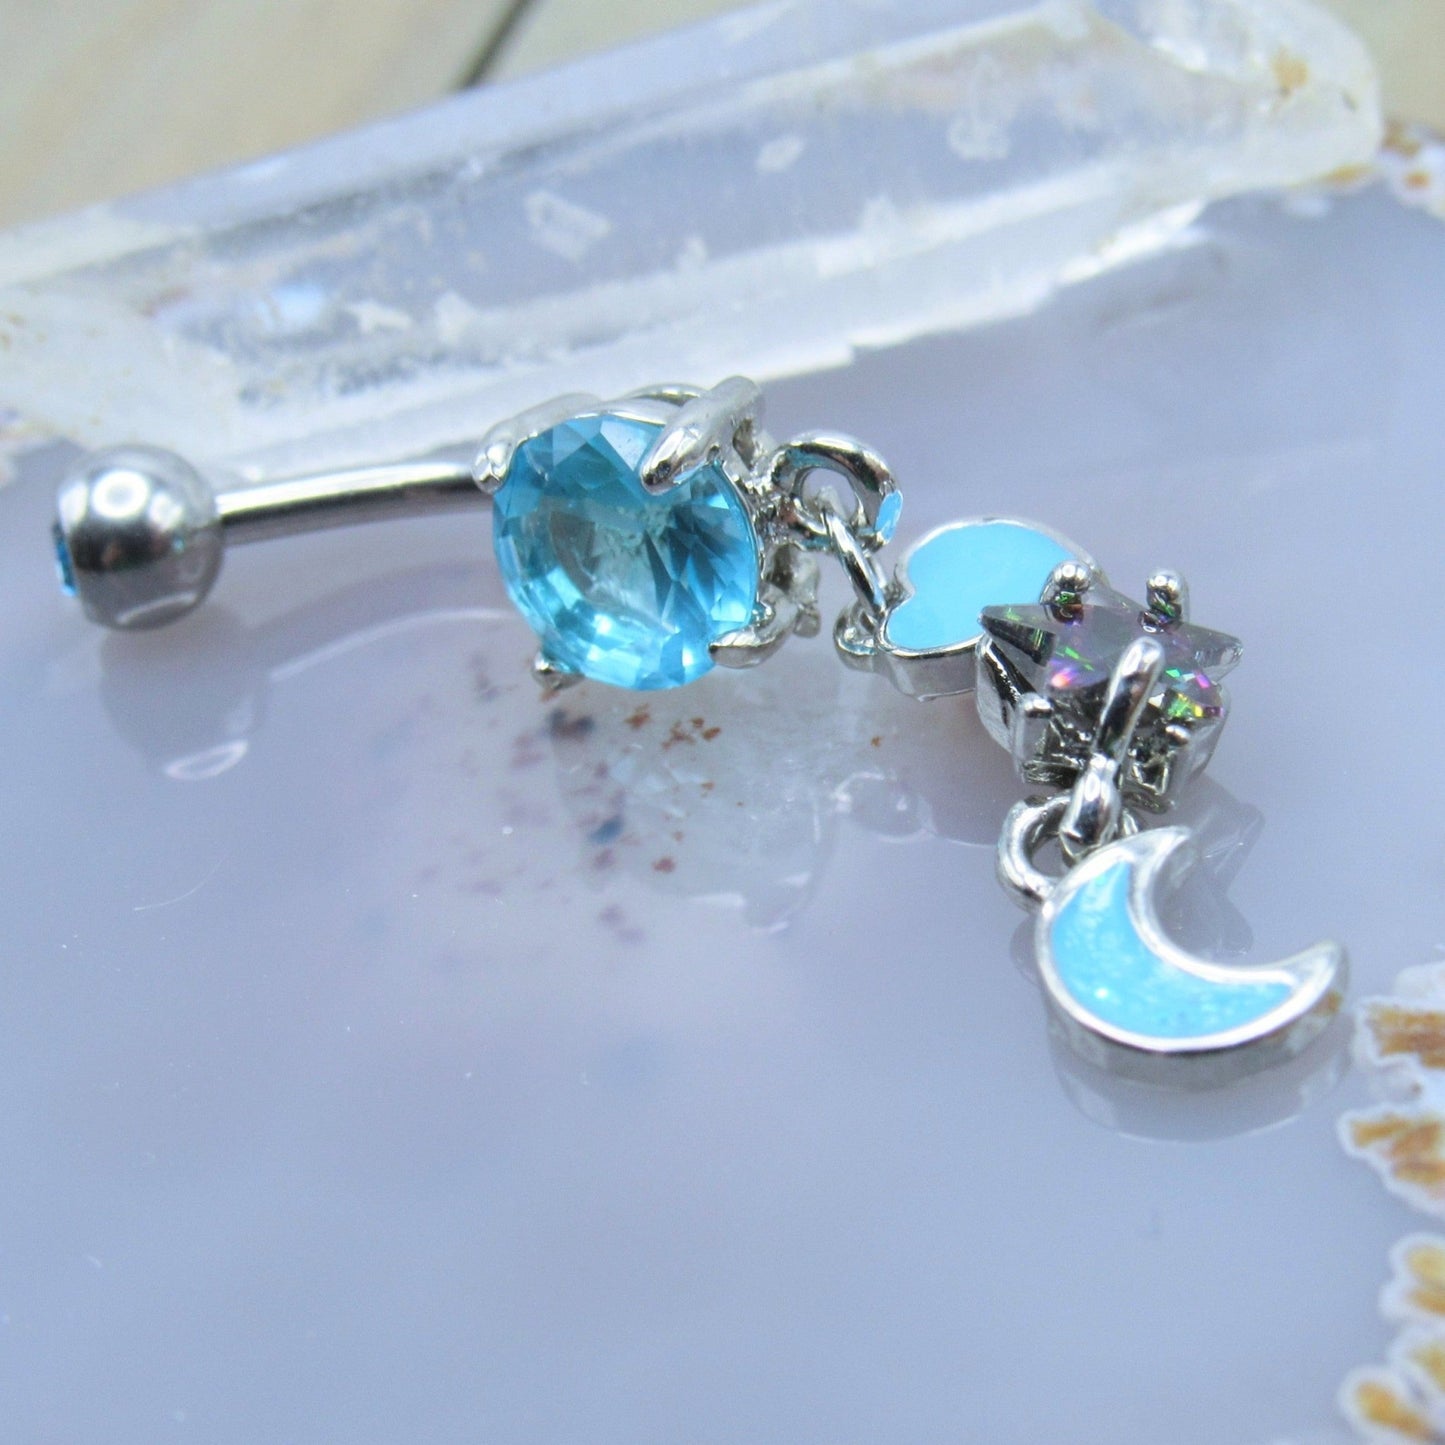 Aqua blue heart moon star gemstone belly button piercing dangle ring 14g 316L stainless steel 7/16" length bar - Siren Body Jewelry